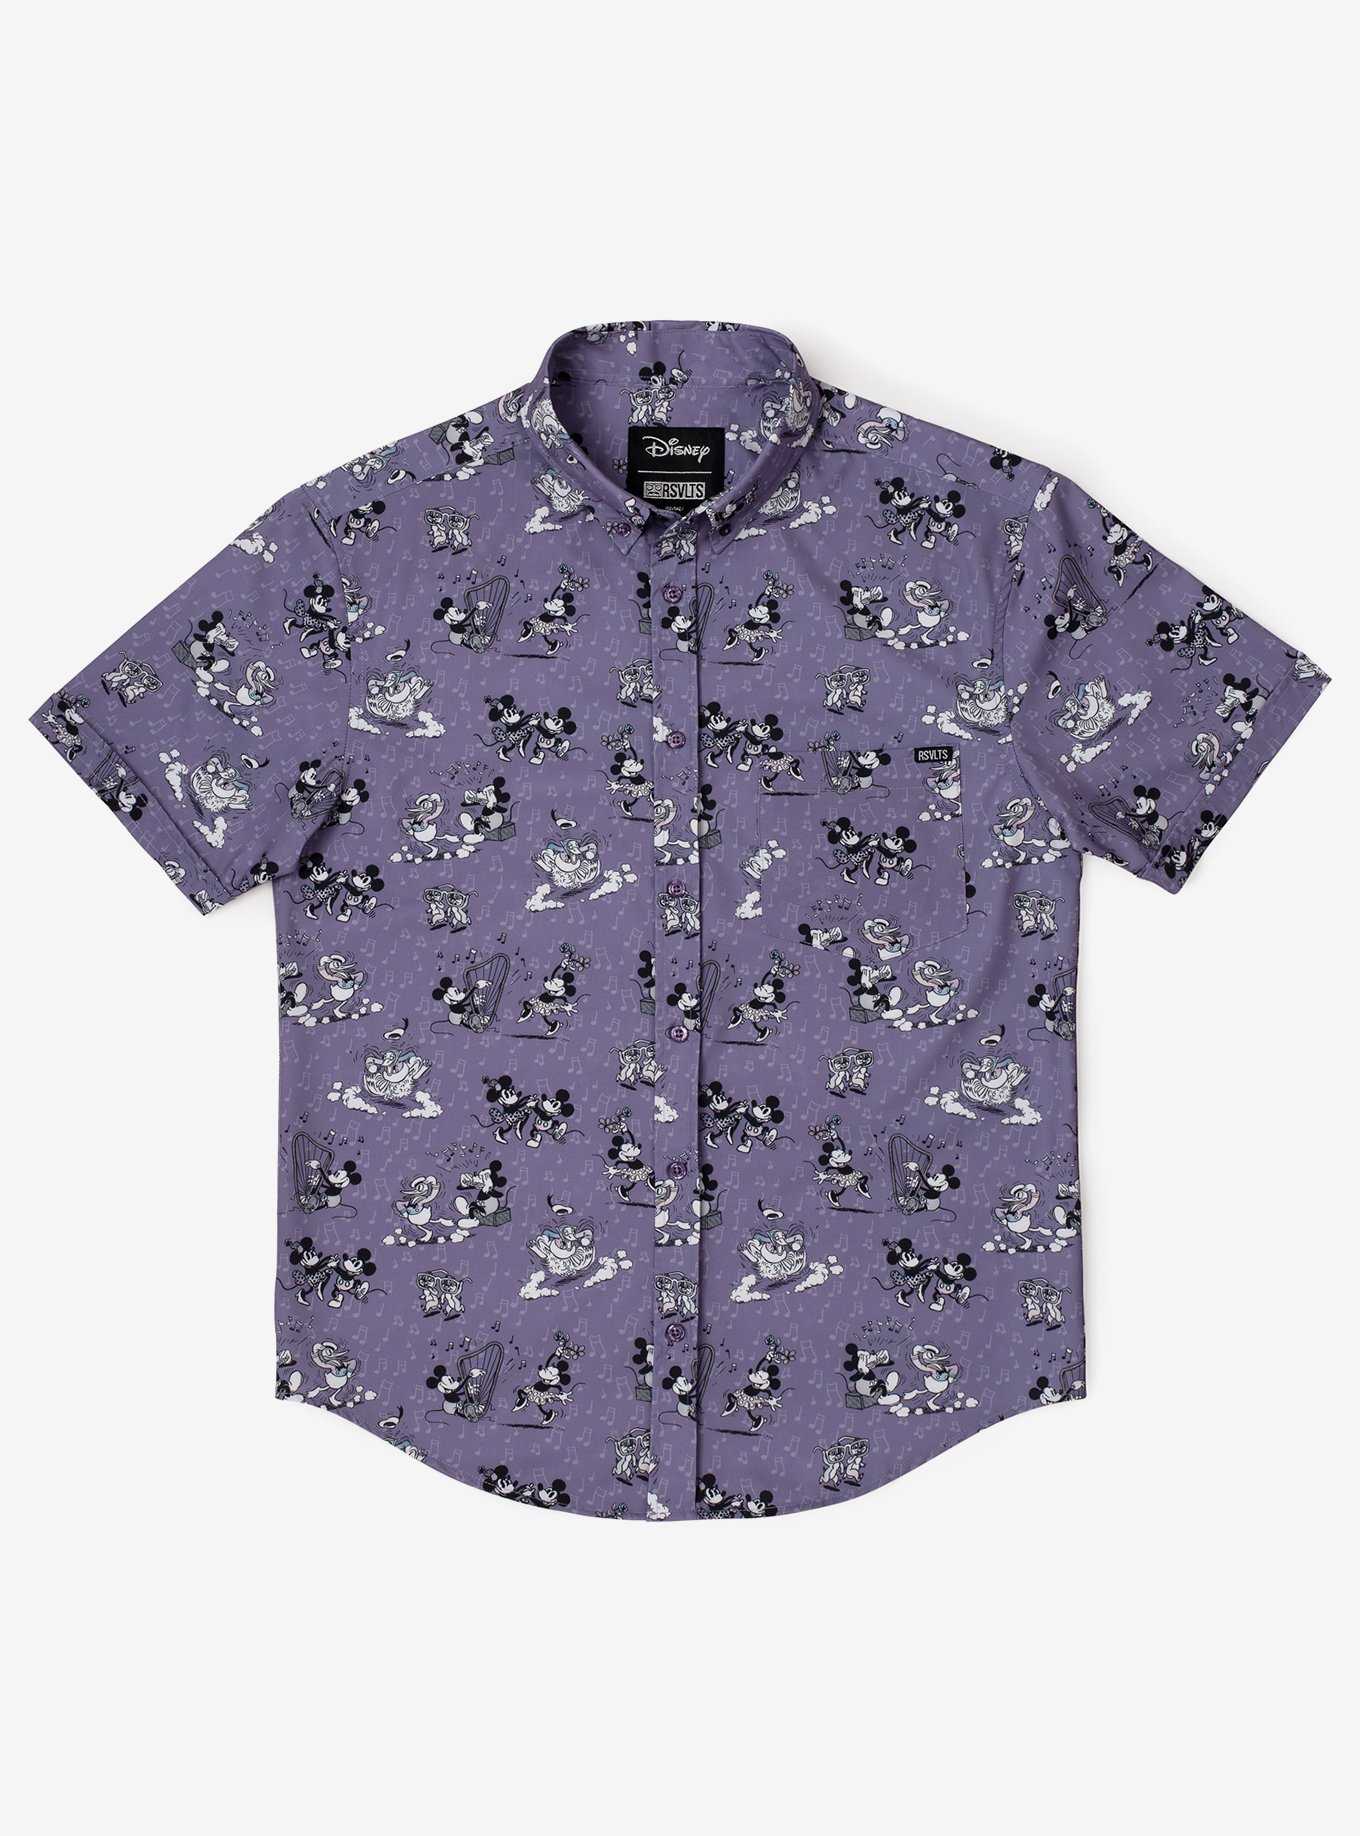 Disney100 x RSVLTS "Dancing Toons" Button-Up Shirt, , hi-res